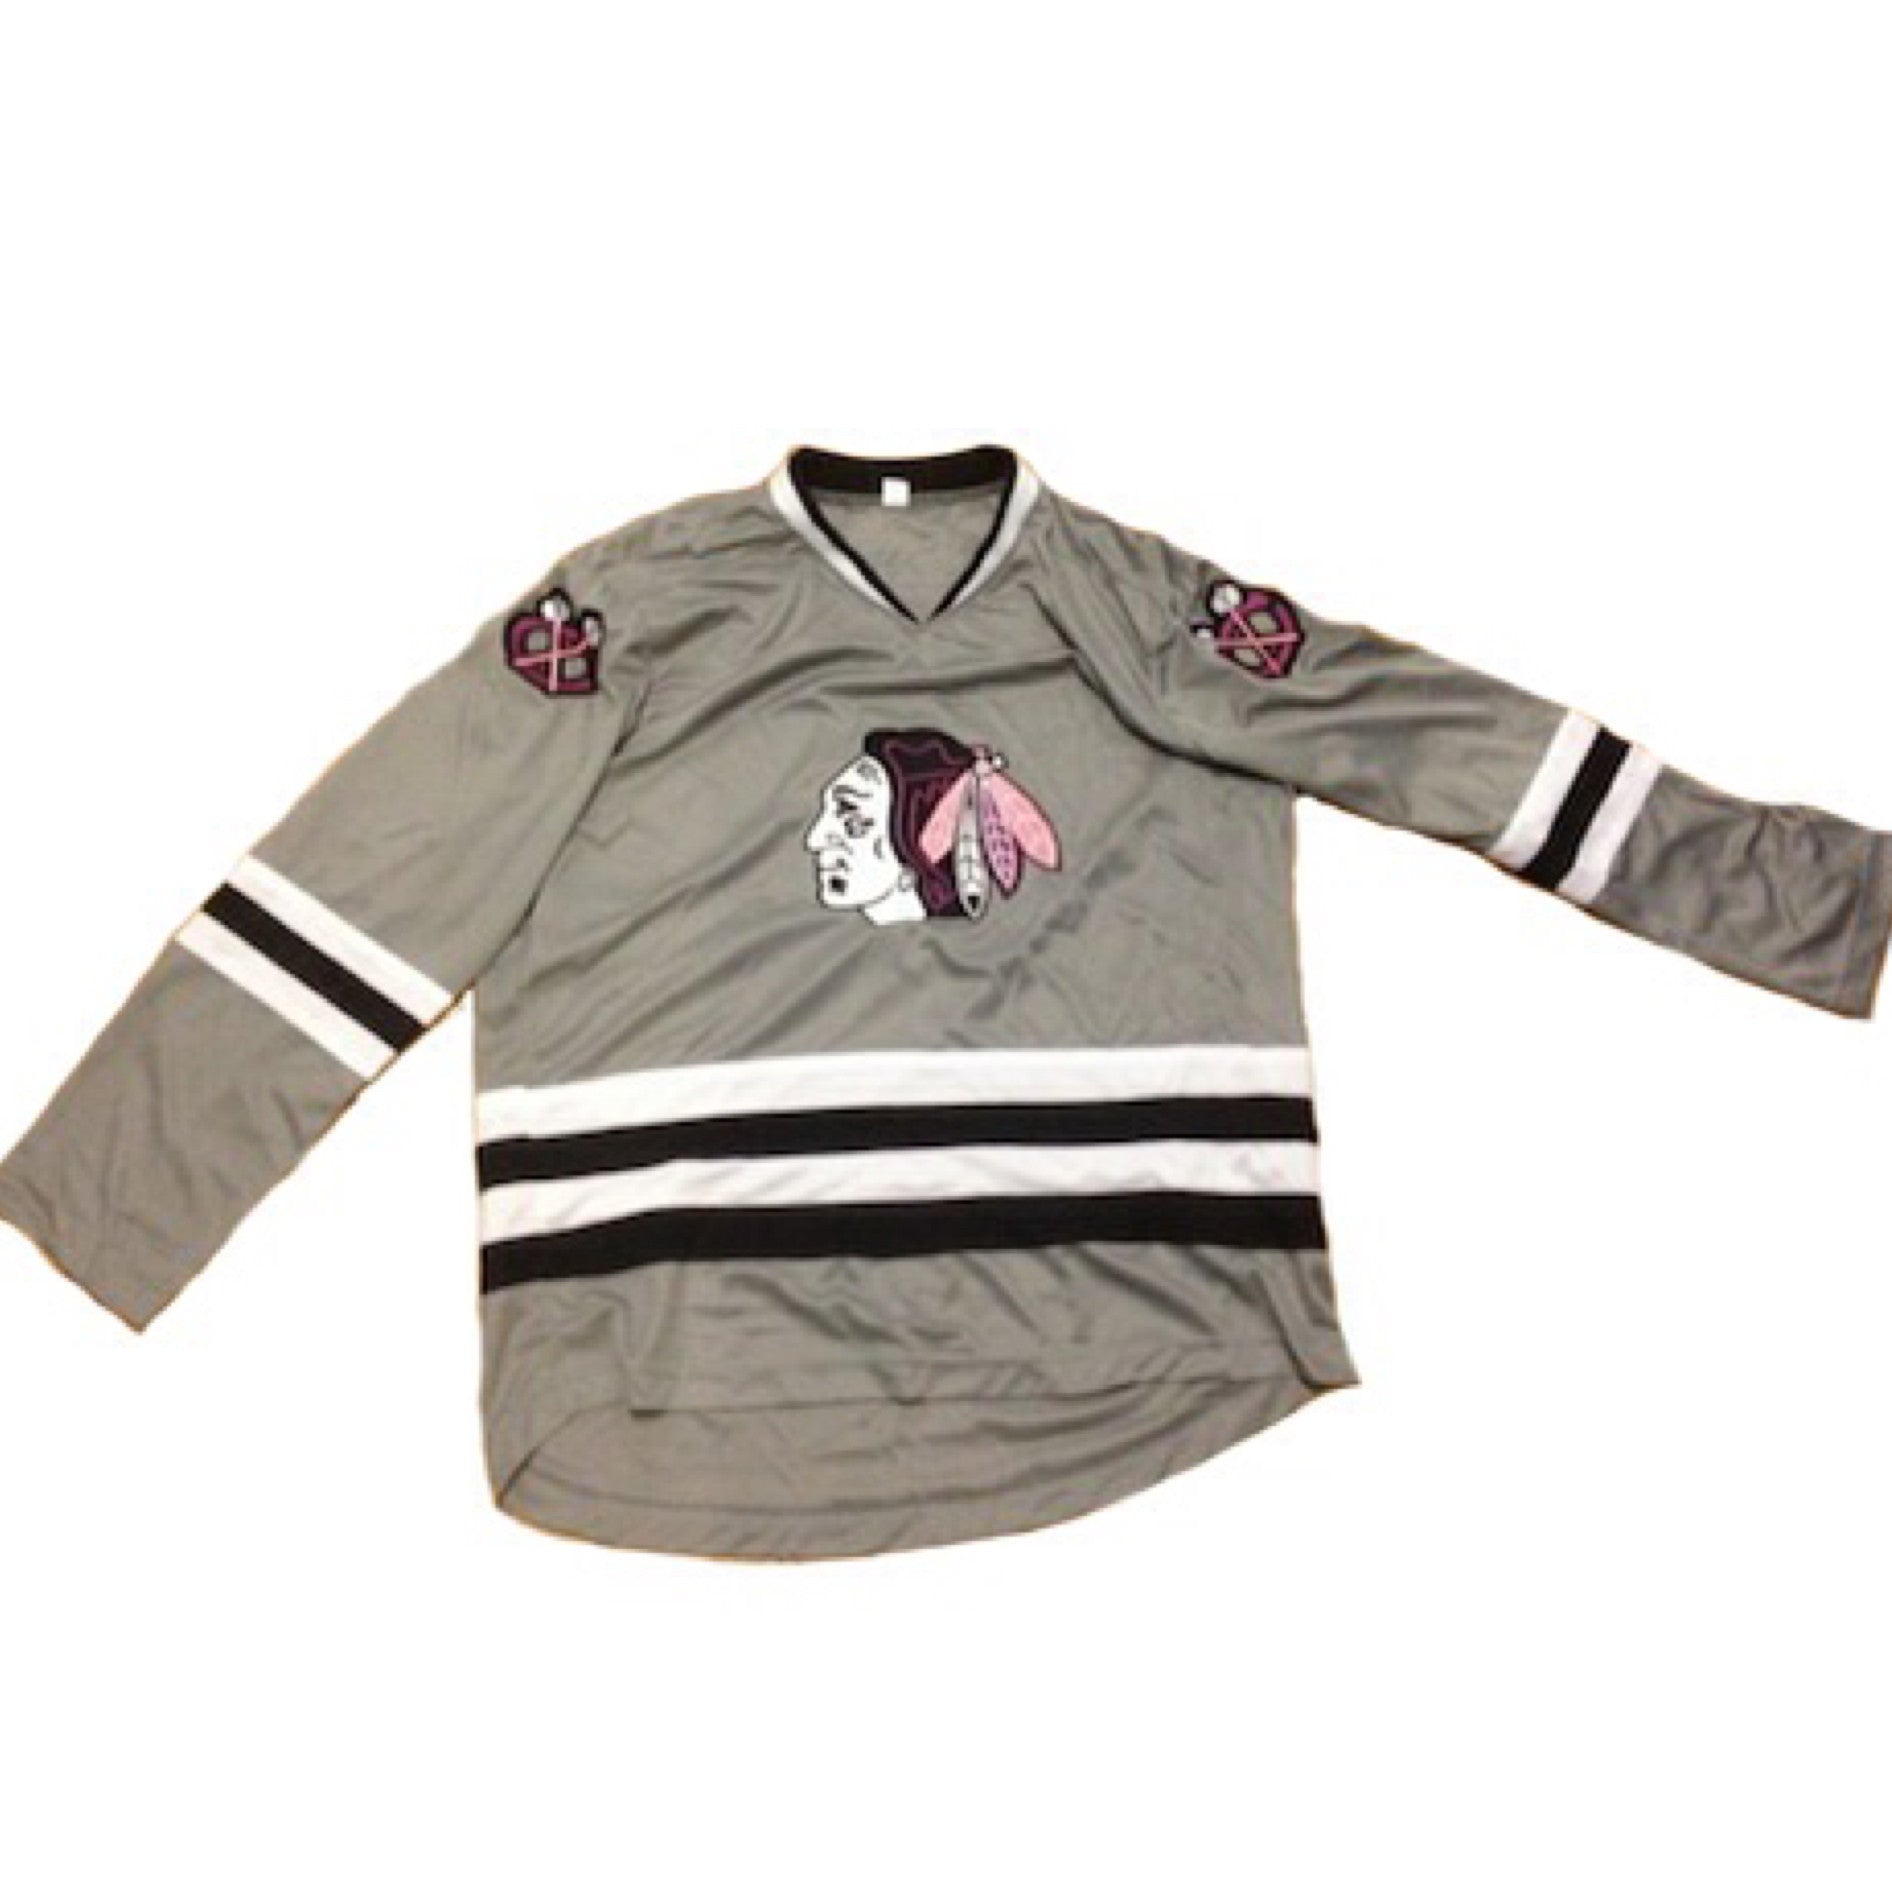 chicago blackhawks pink jersey